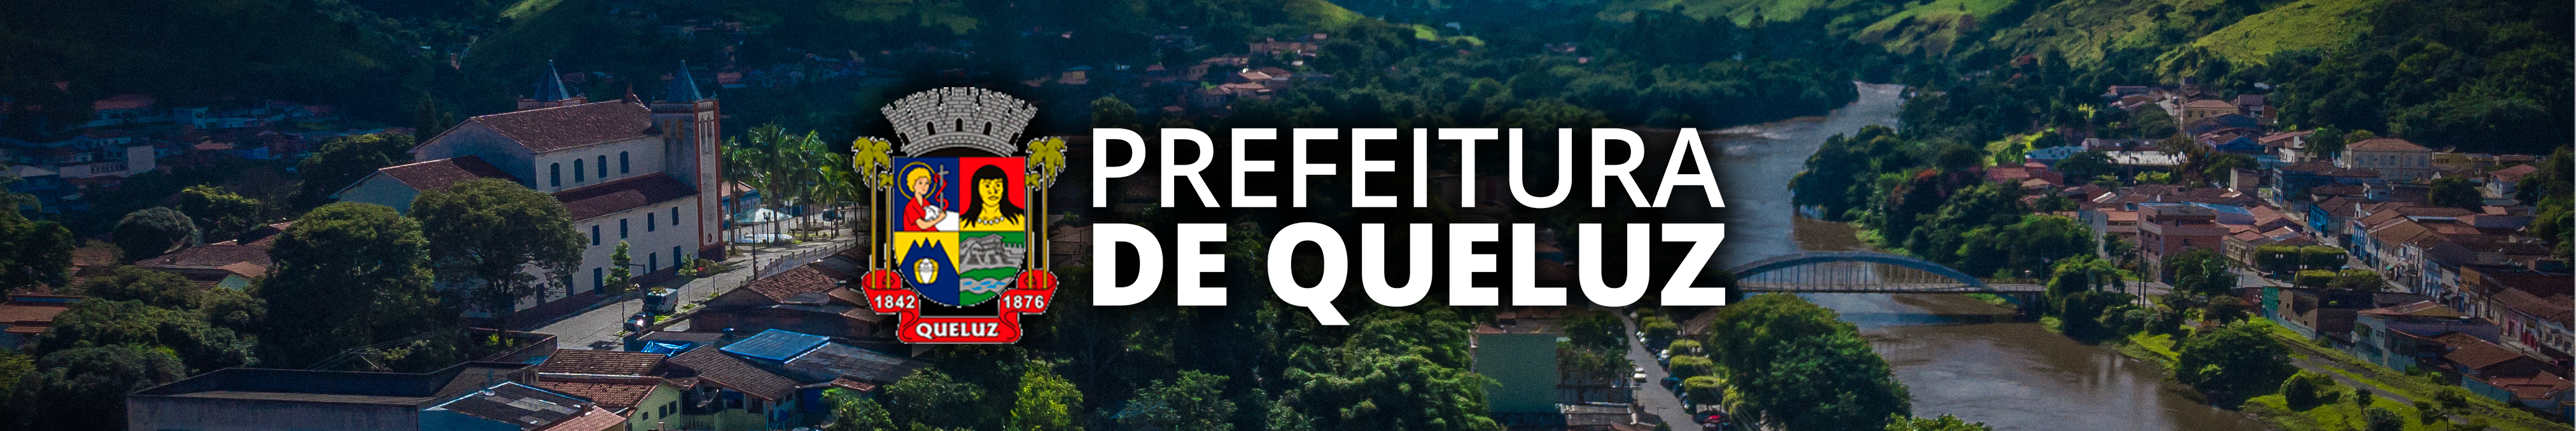 Prefeitura de Queluz – Site Oficial